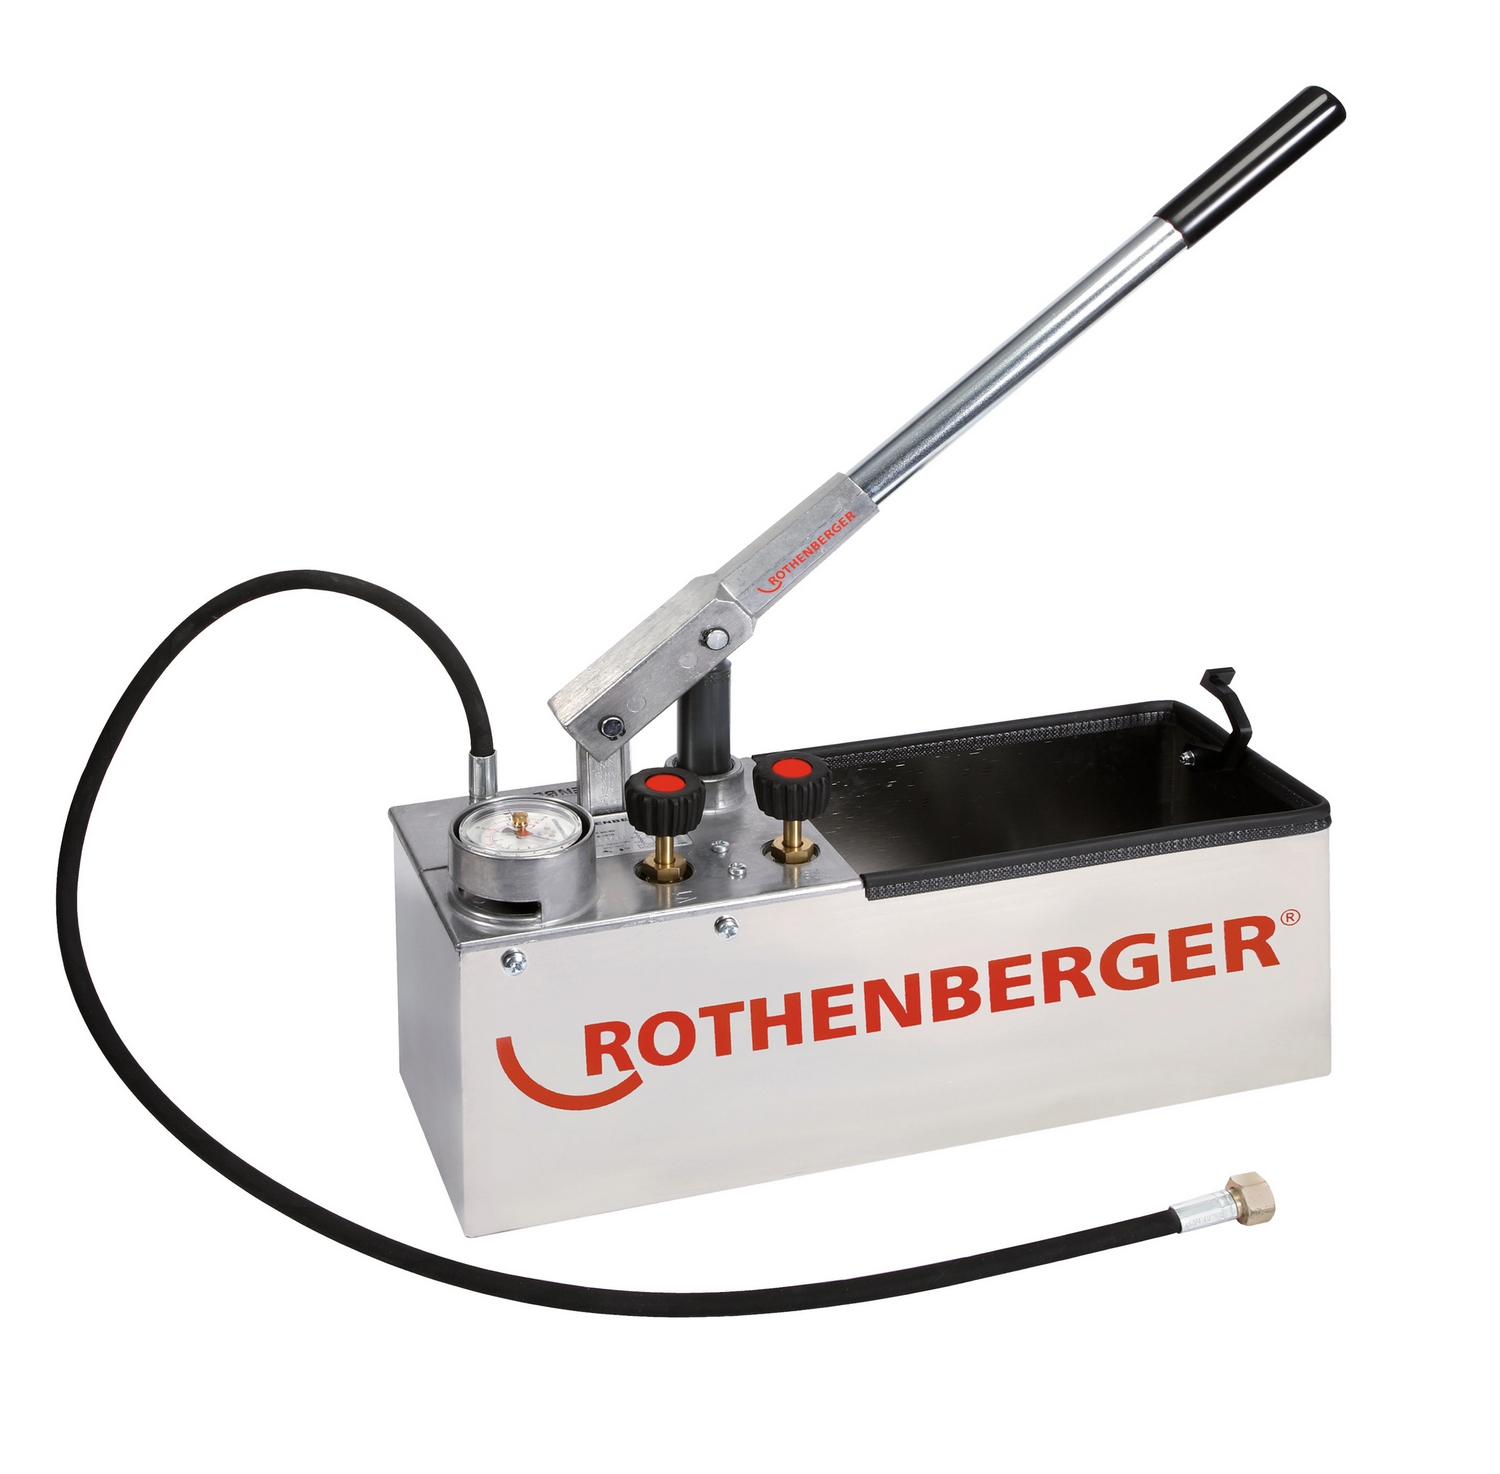 Pumpa ruční Rothenberger RP 50-S 60 bar ROTHENBERGER